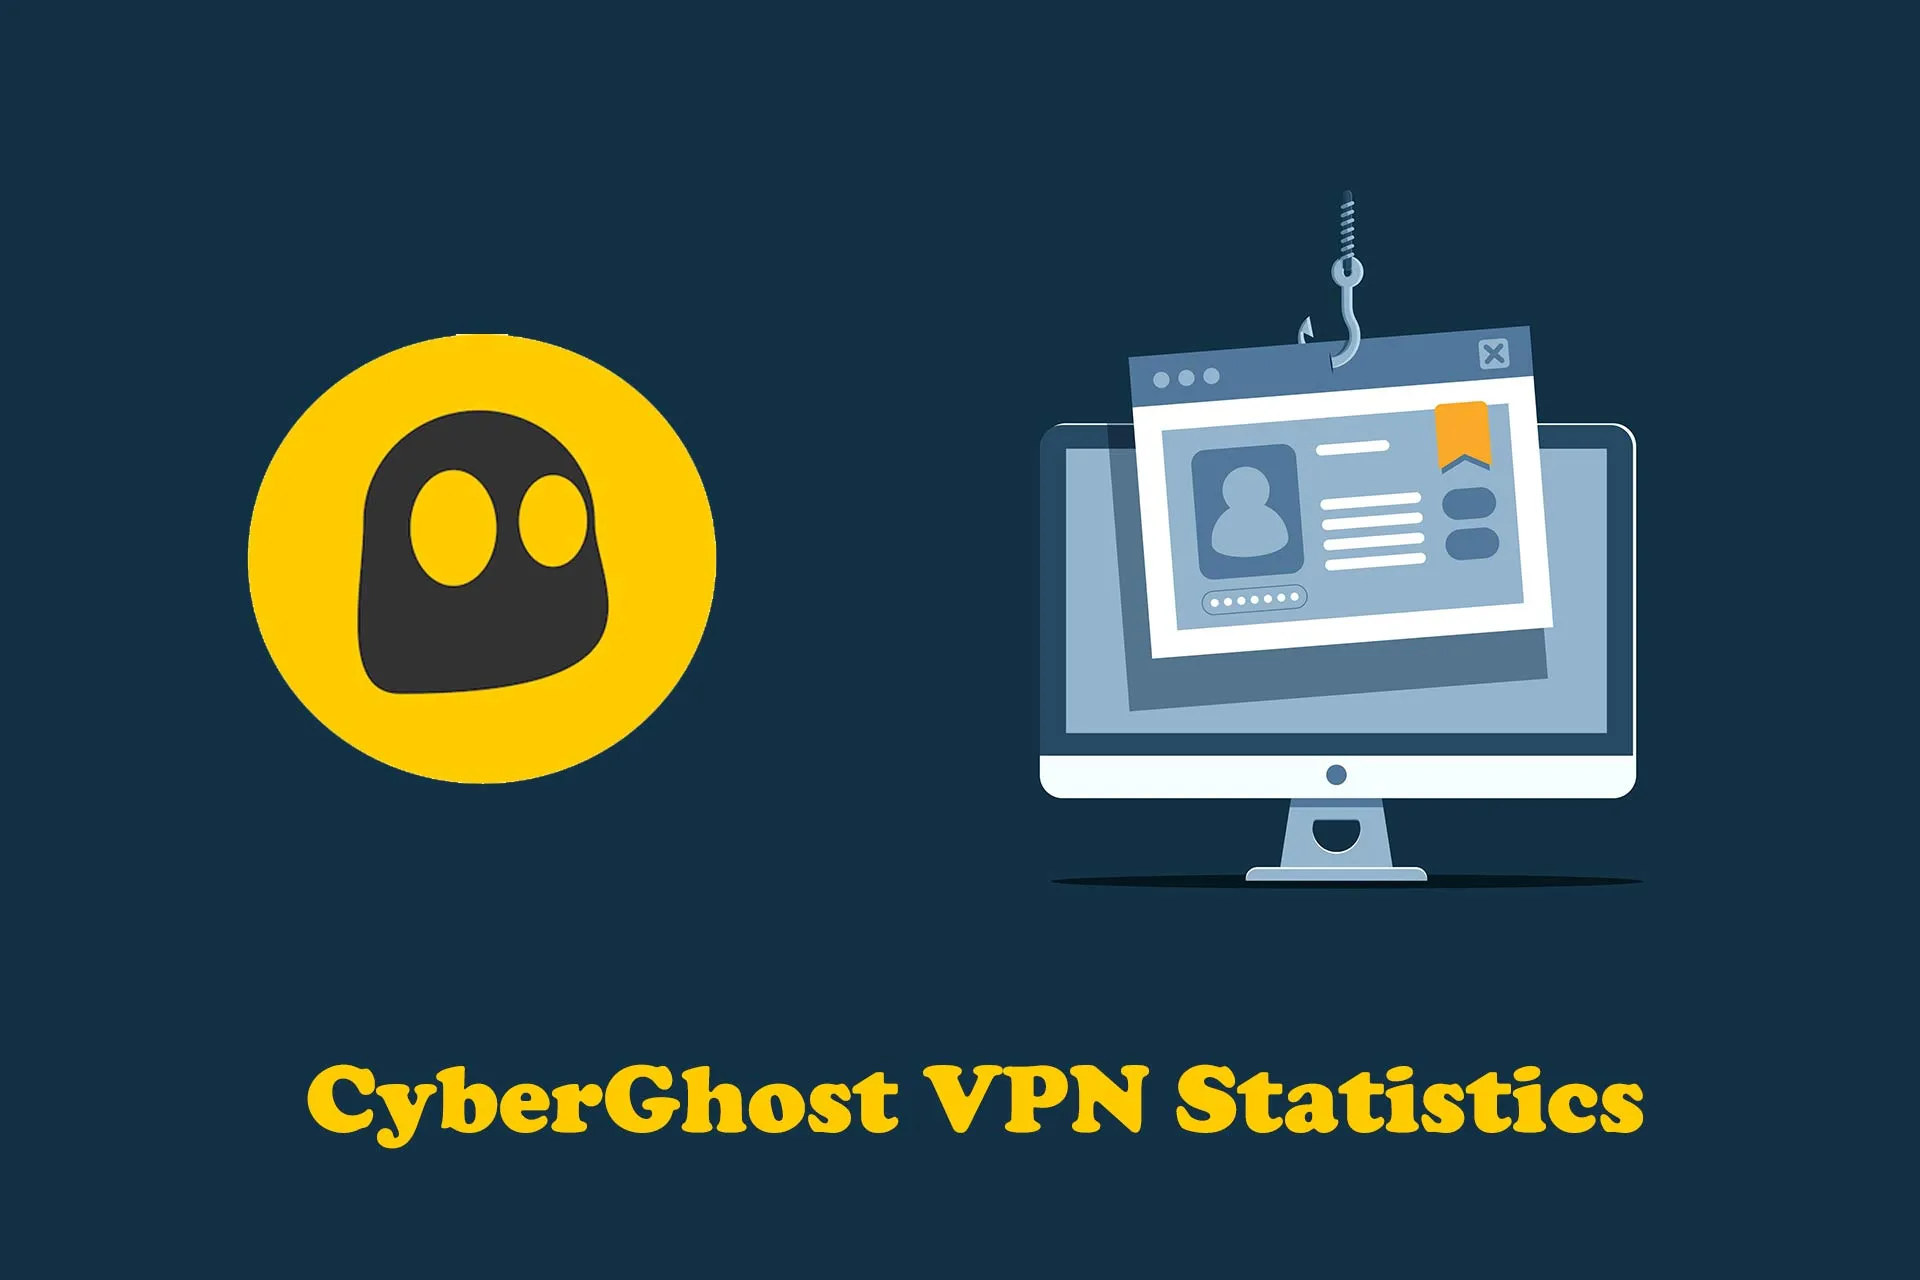 CyberGhost VPN Statistics